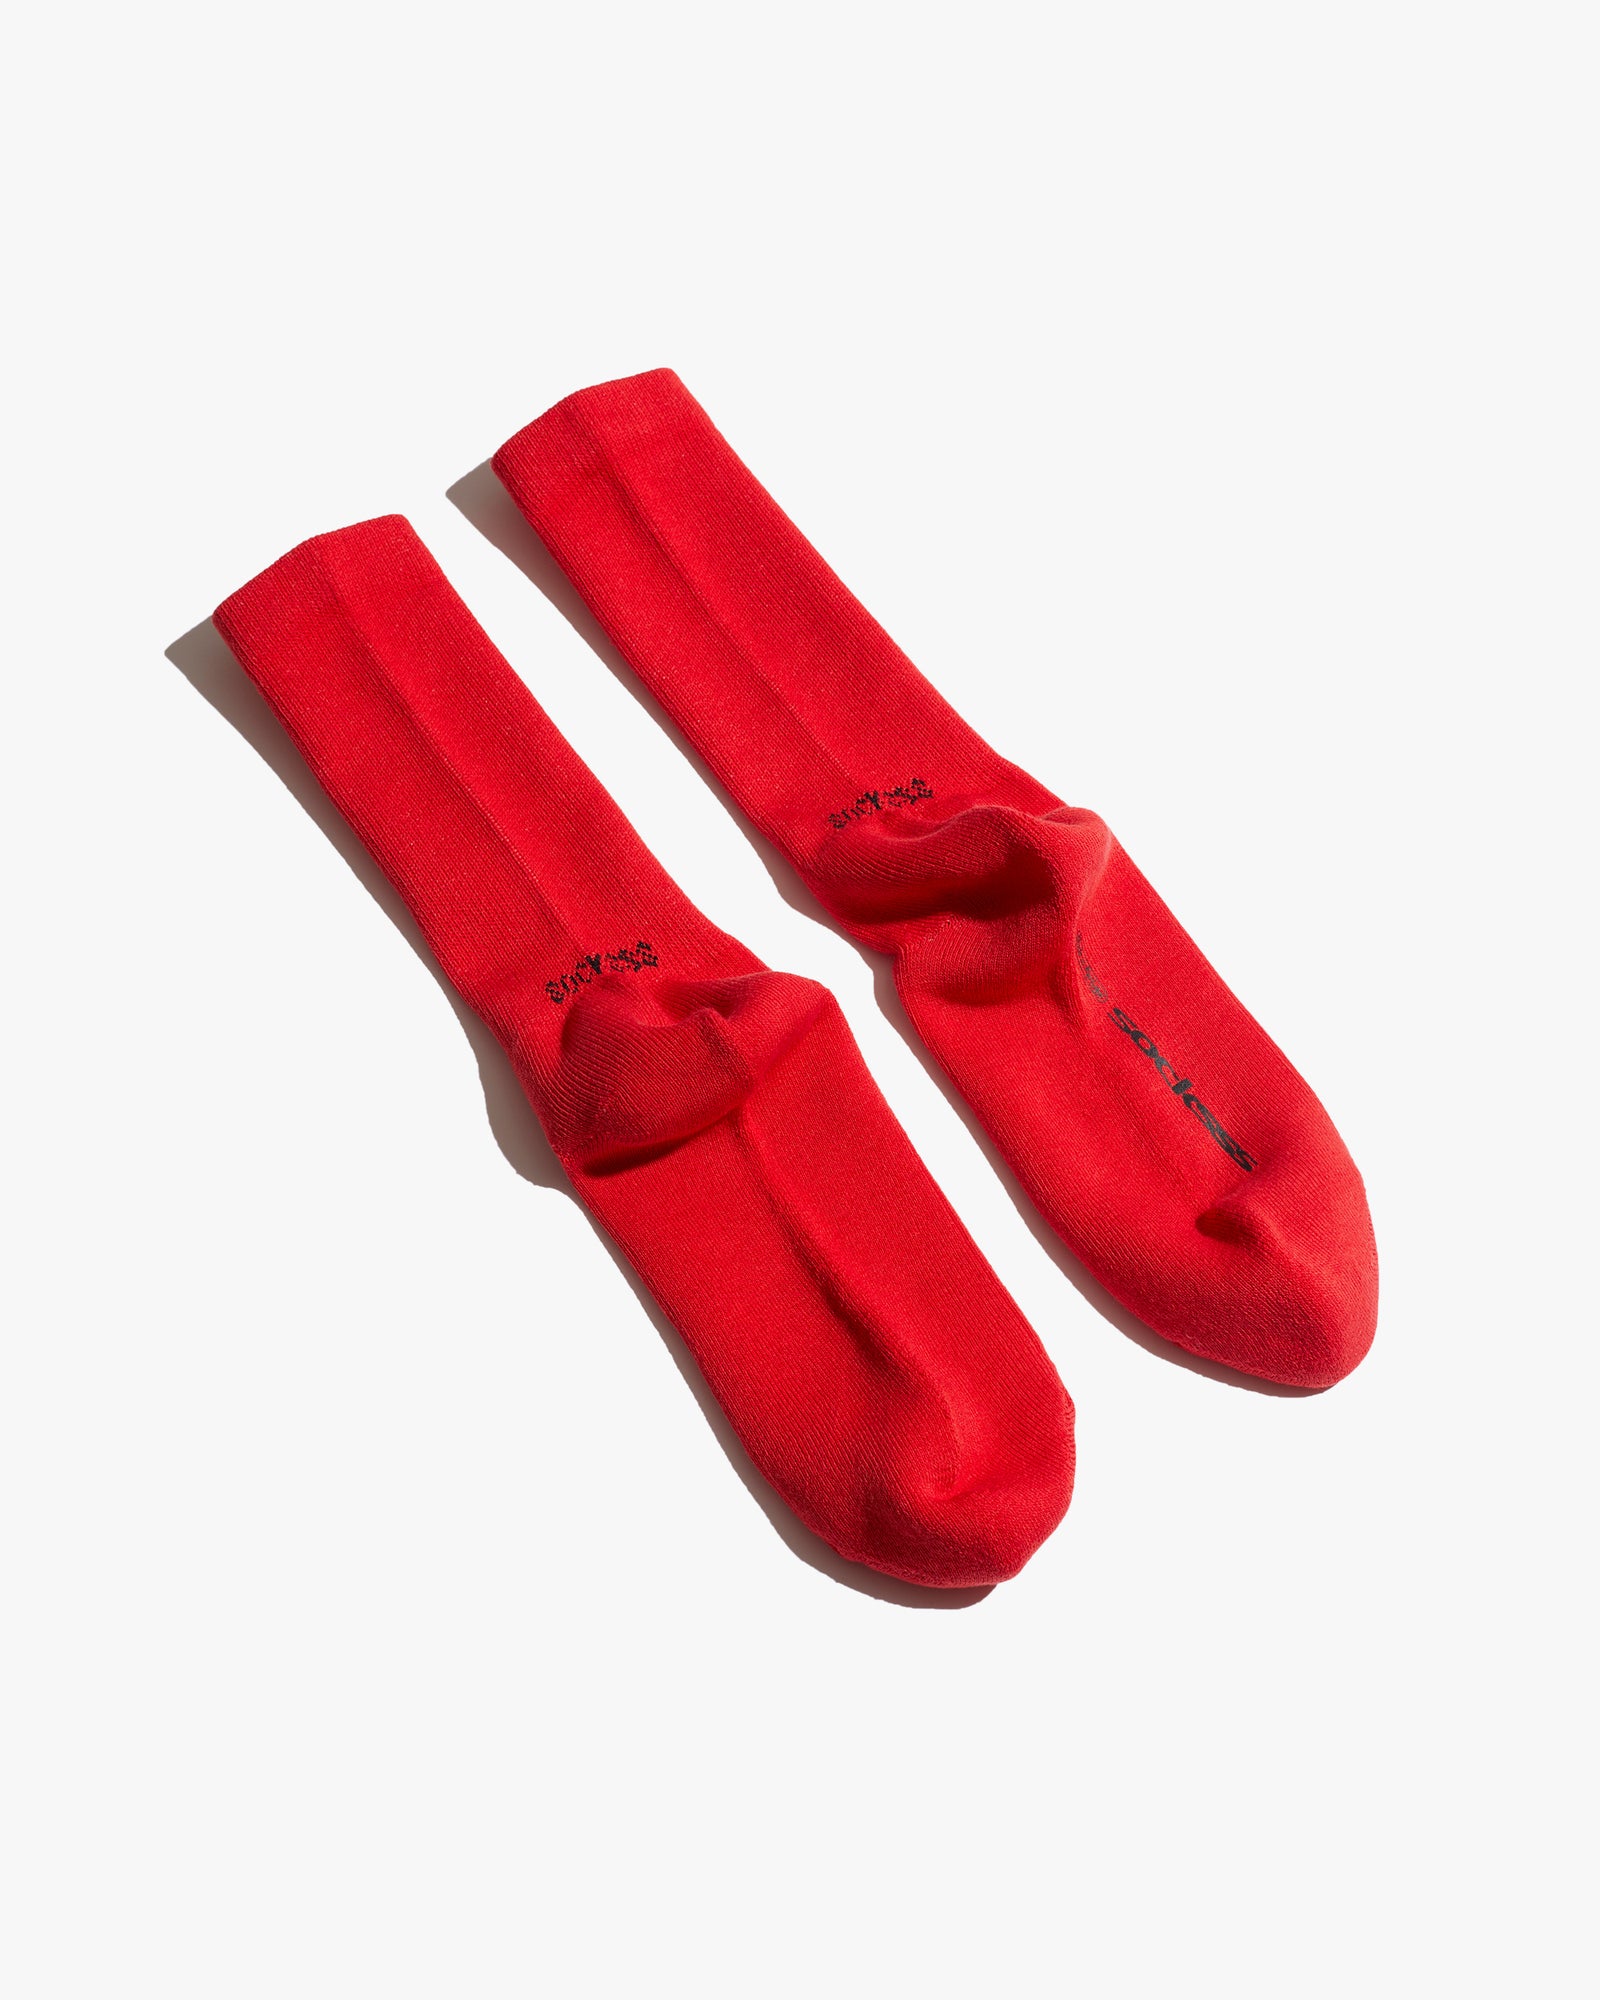 the soles of the Cherry Original Socks